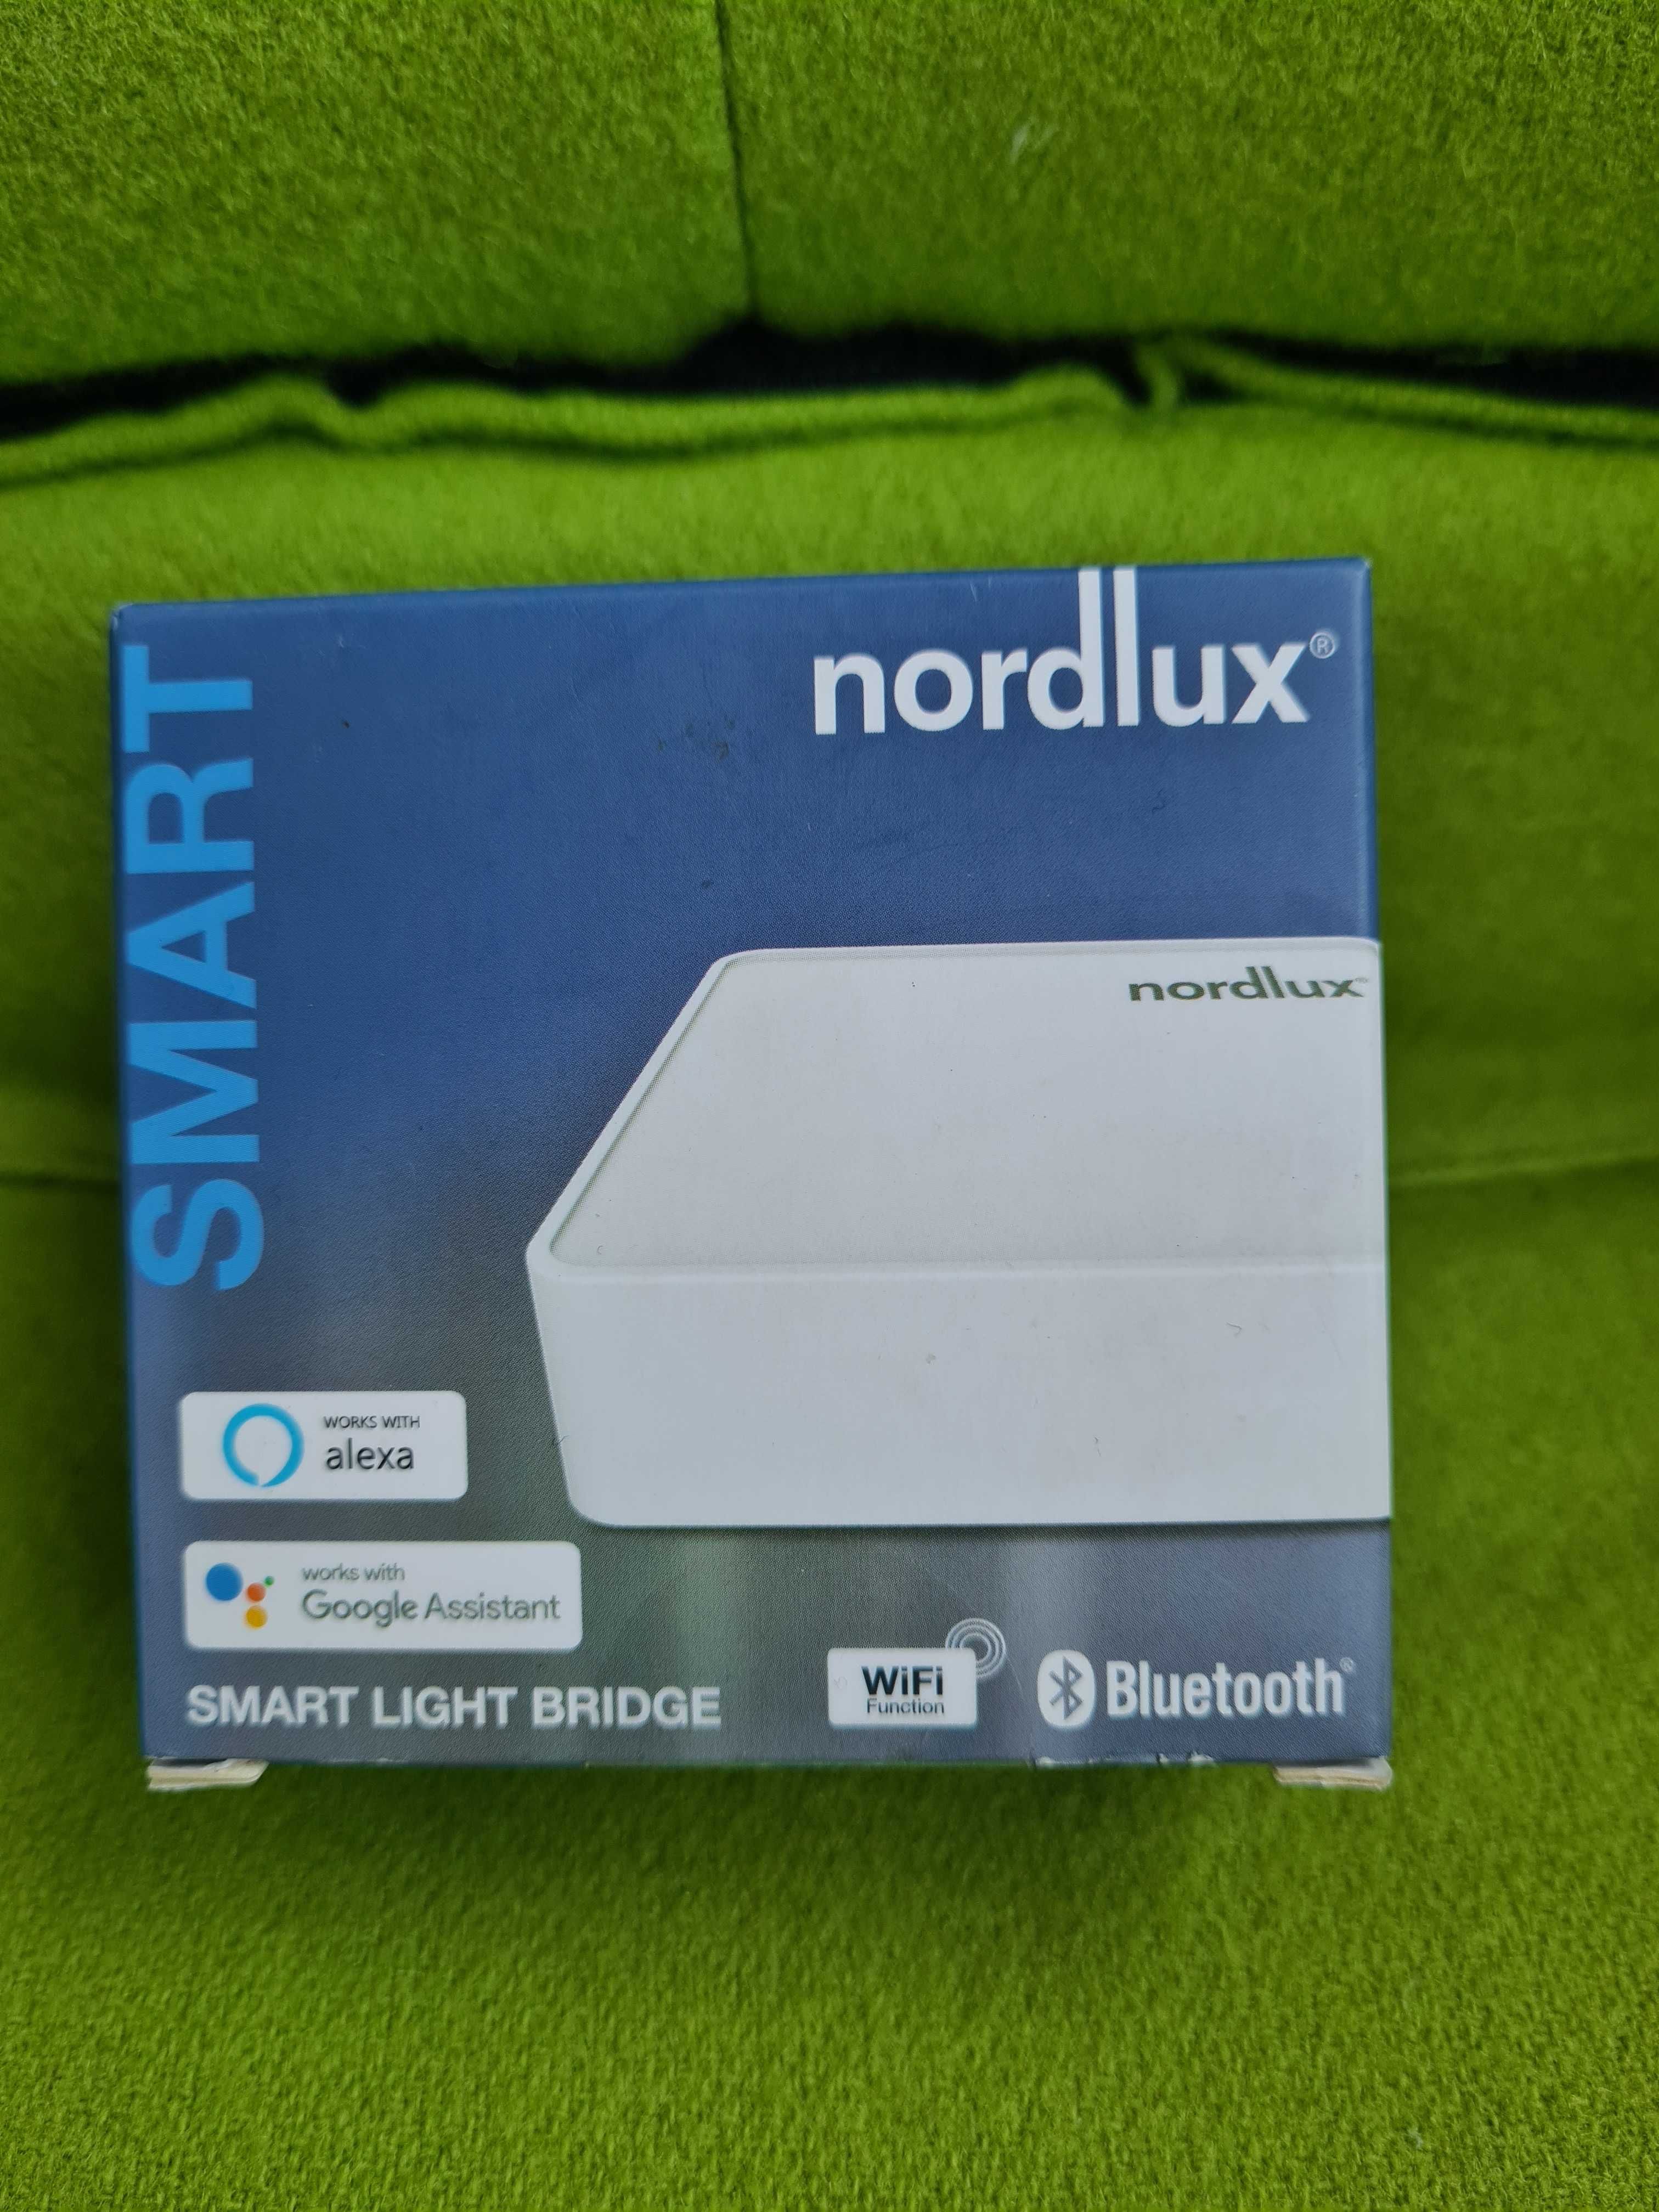 Nordlux SMART LIGHT BRIDGE wifi Bluetooth Alexa, Google assistantant